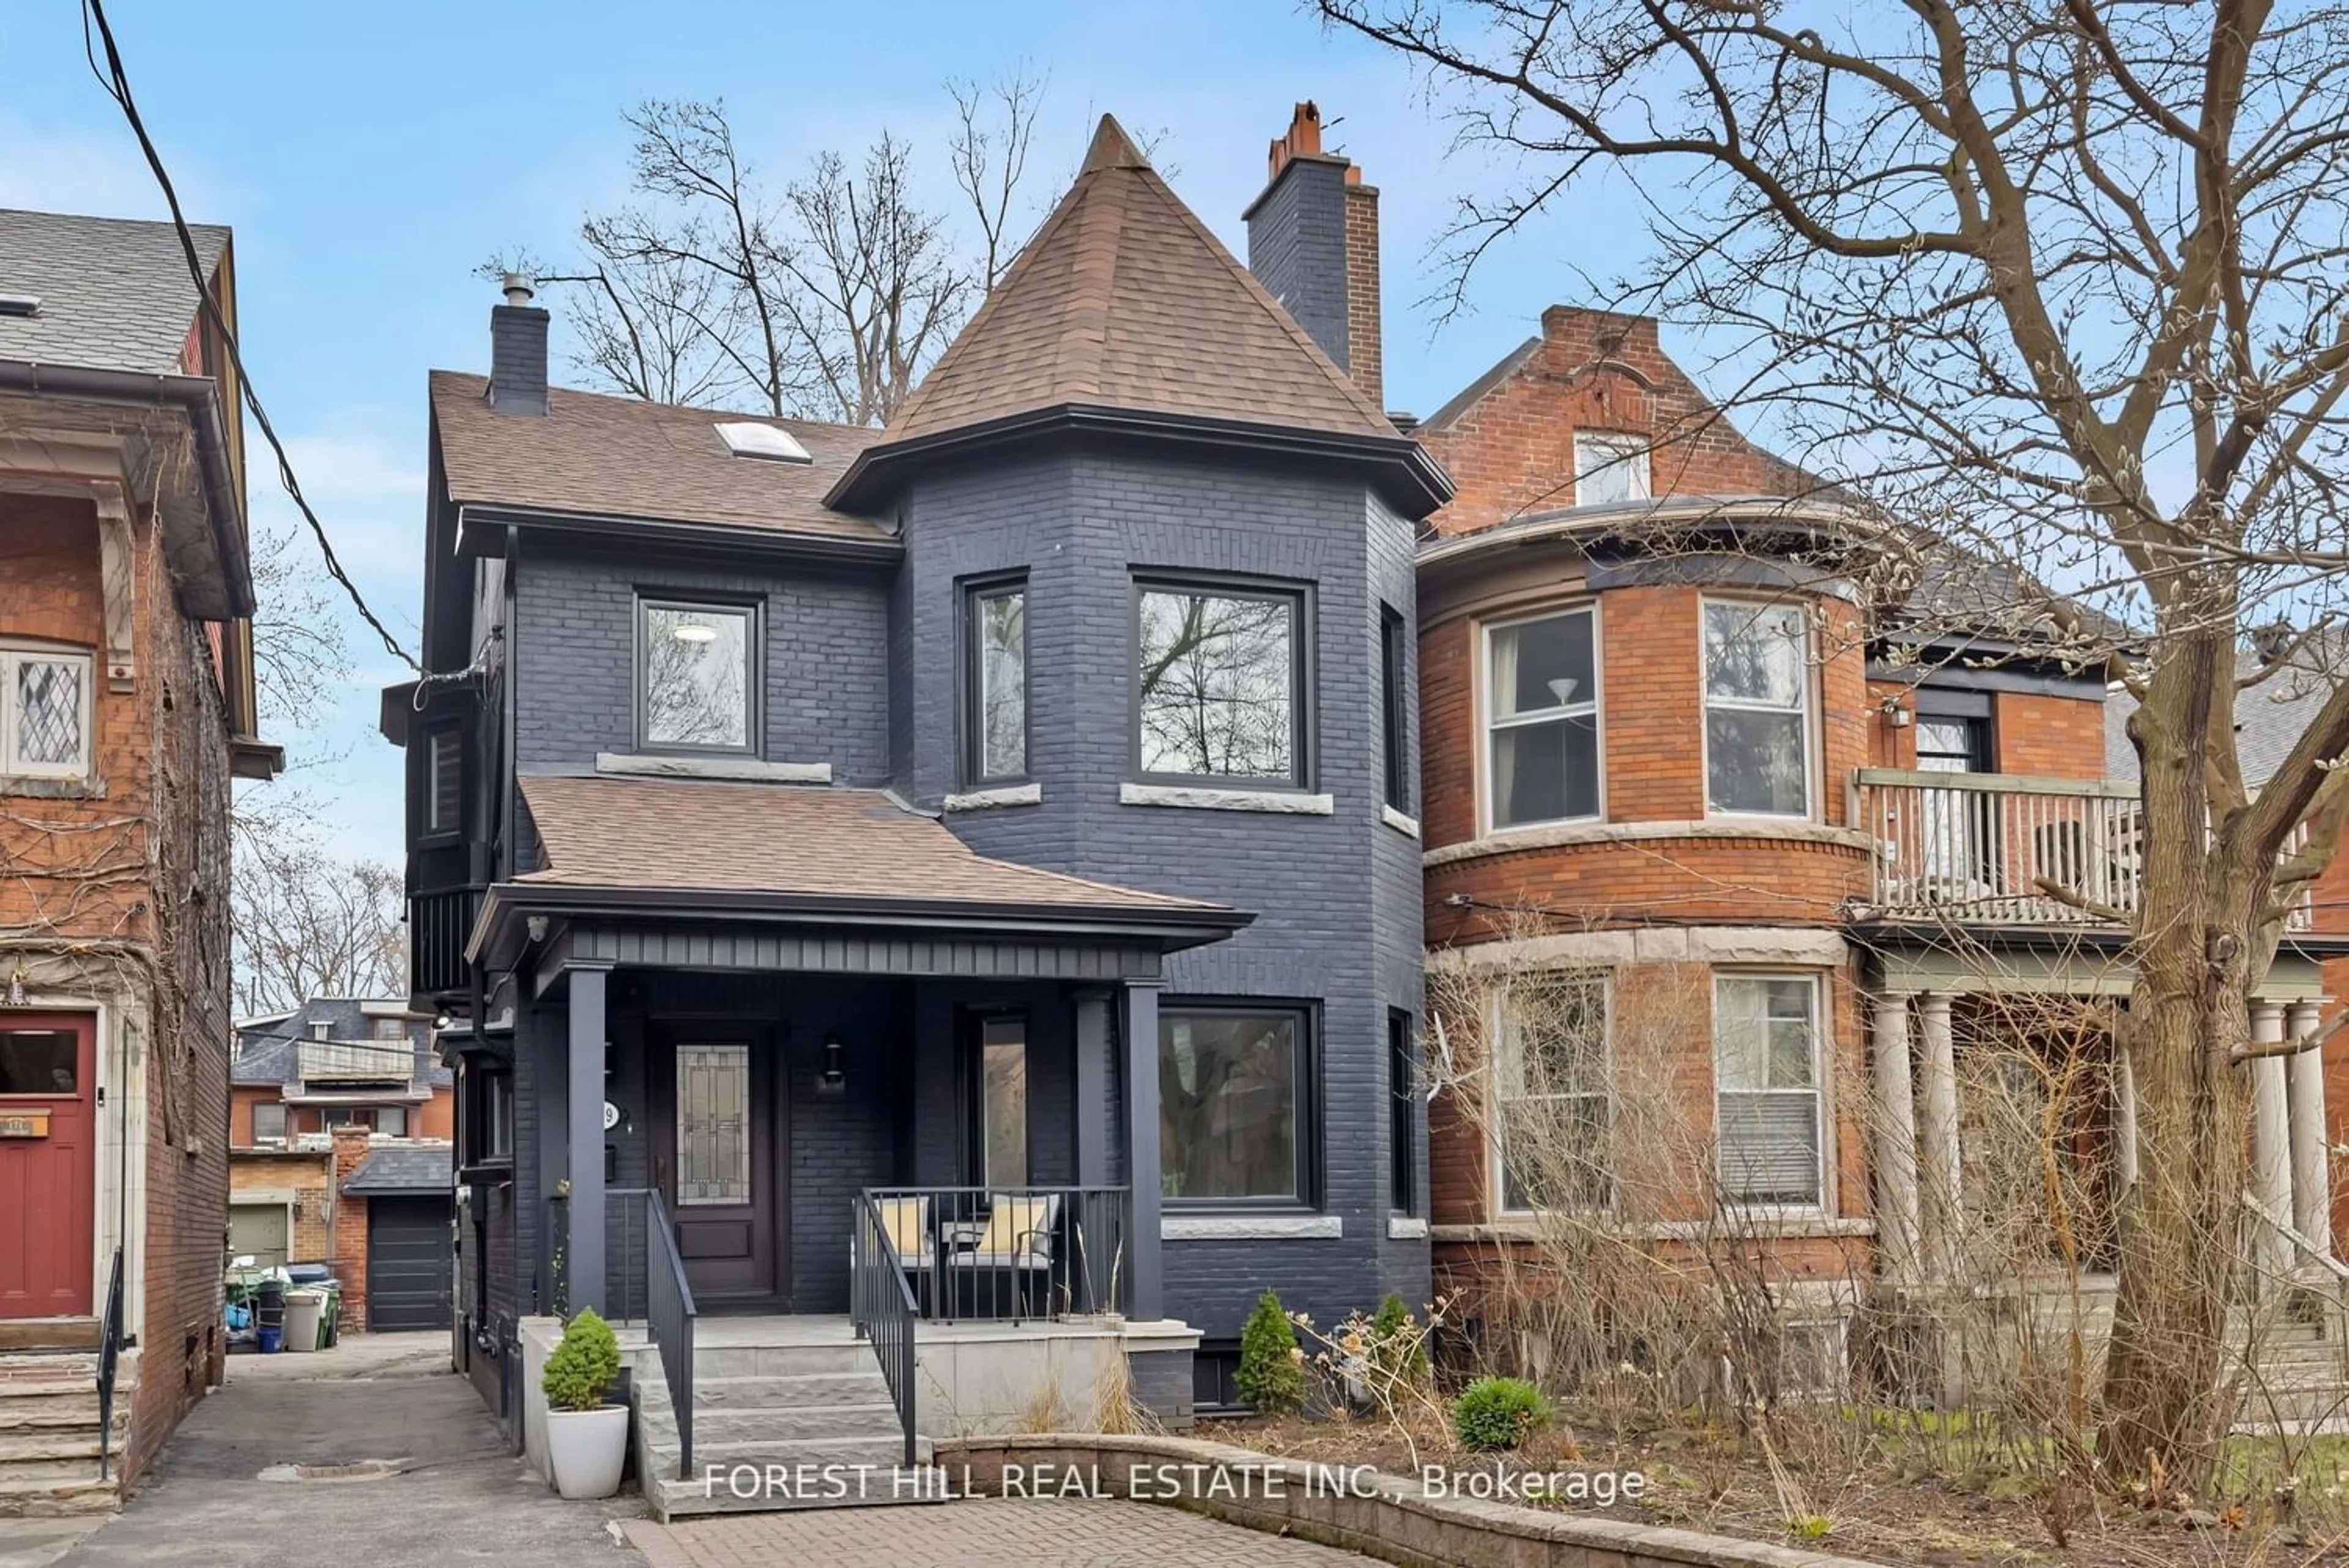 Home with brick exterior material for 169 Walmer Rd, Toronto Ontario M5R 2X8